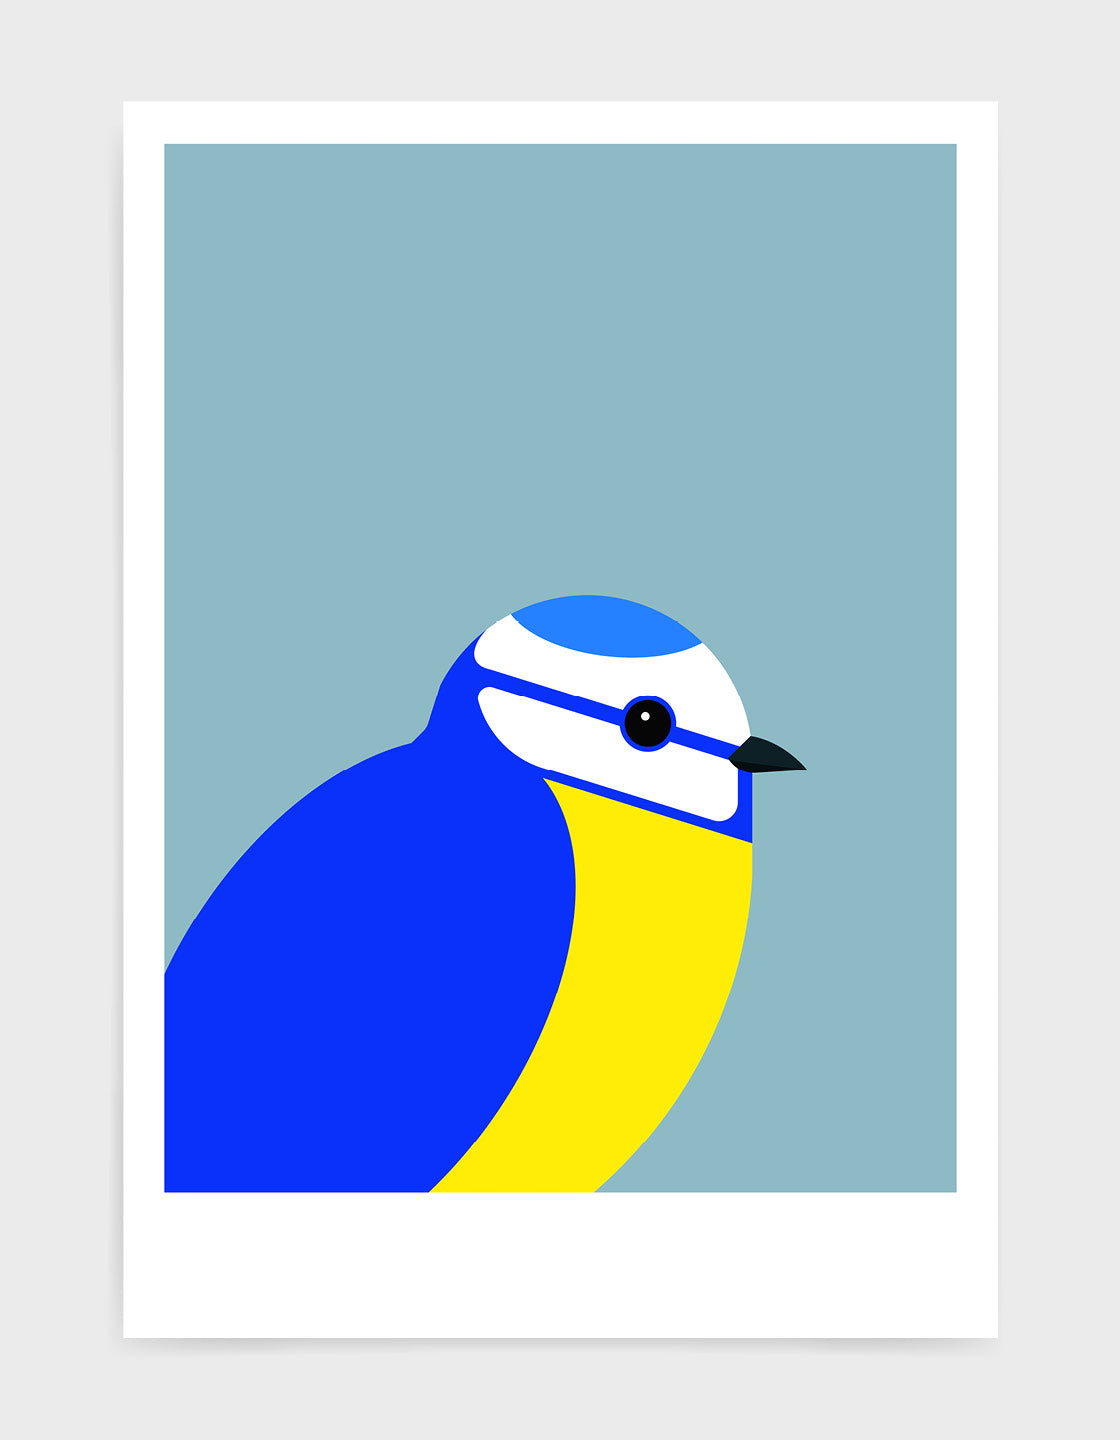 modern illustration of a blue tit bird against a light blue background